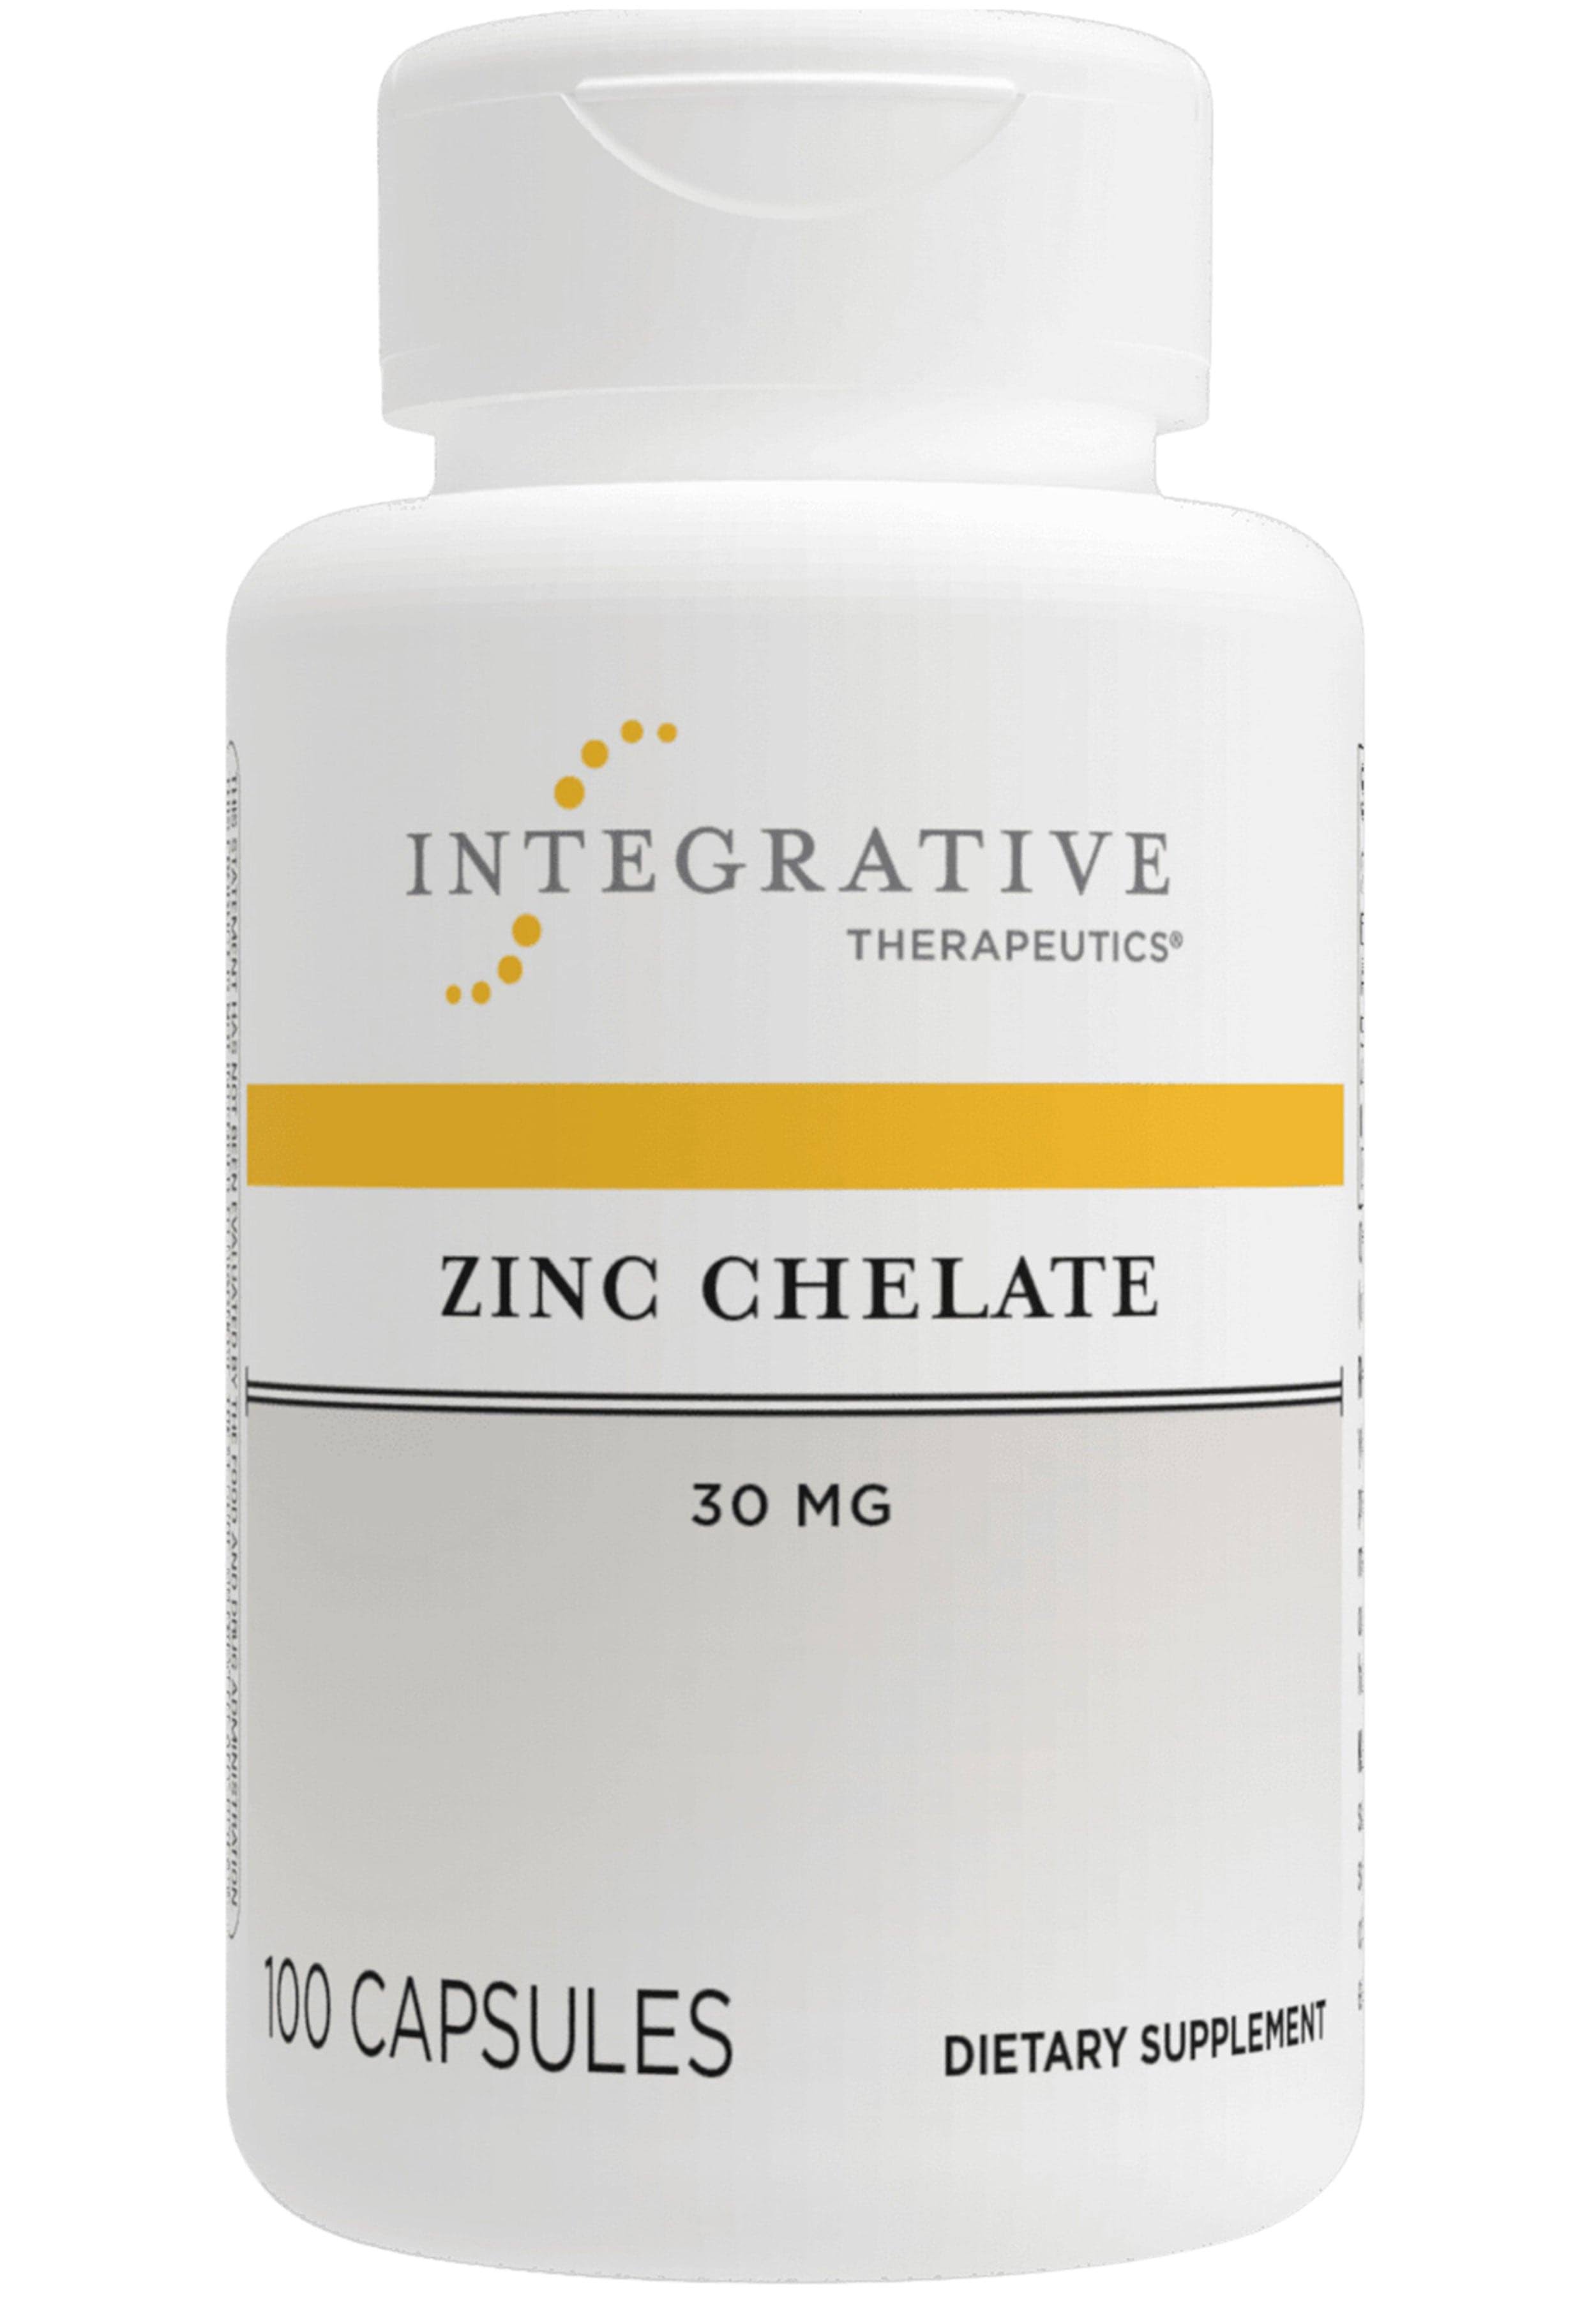 Integrative Therapeutics Zinc Chelate 30mg